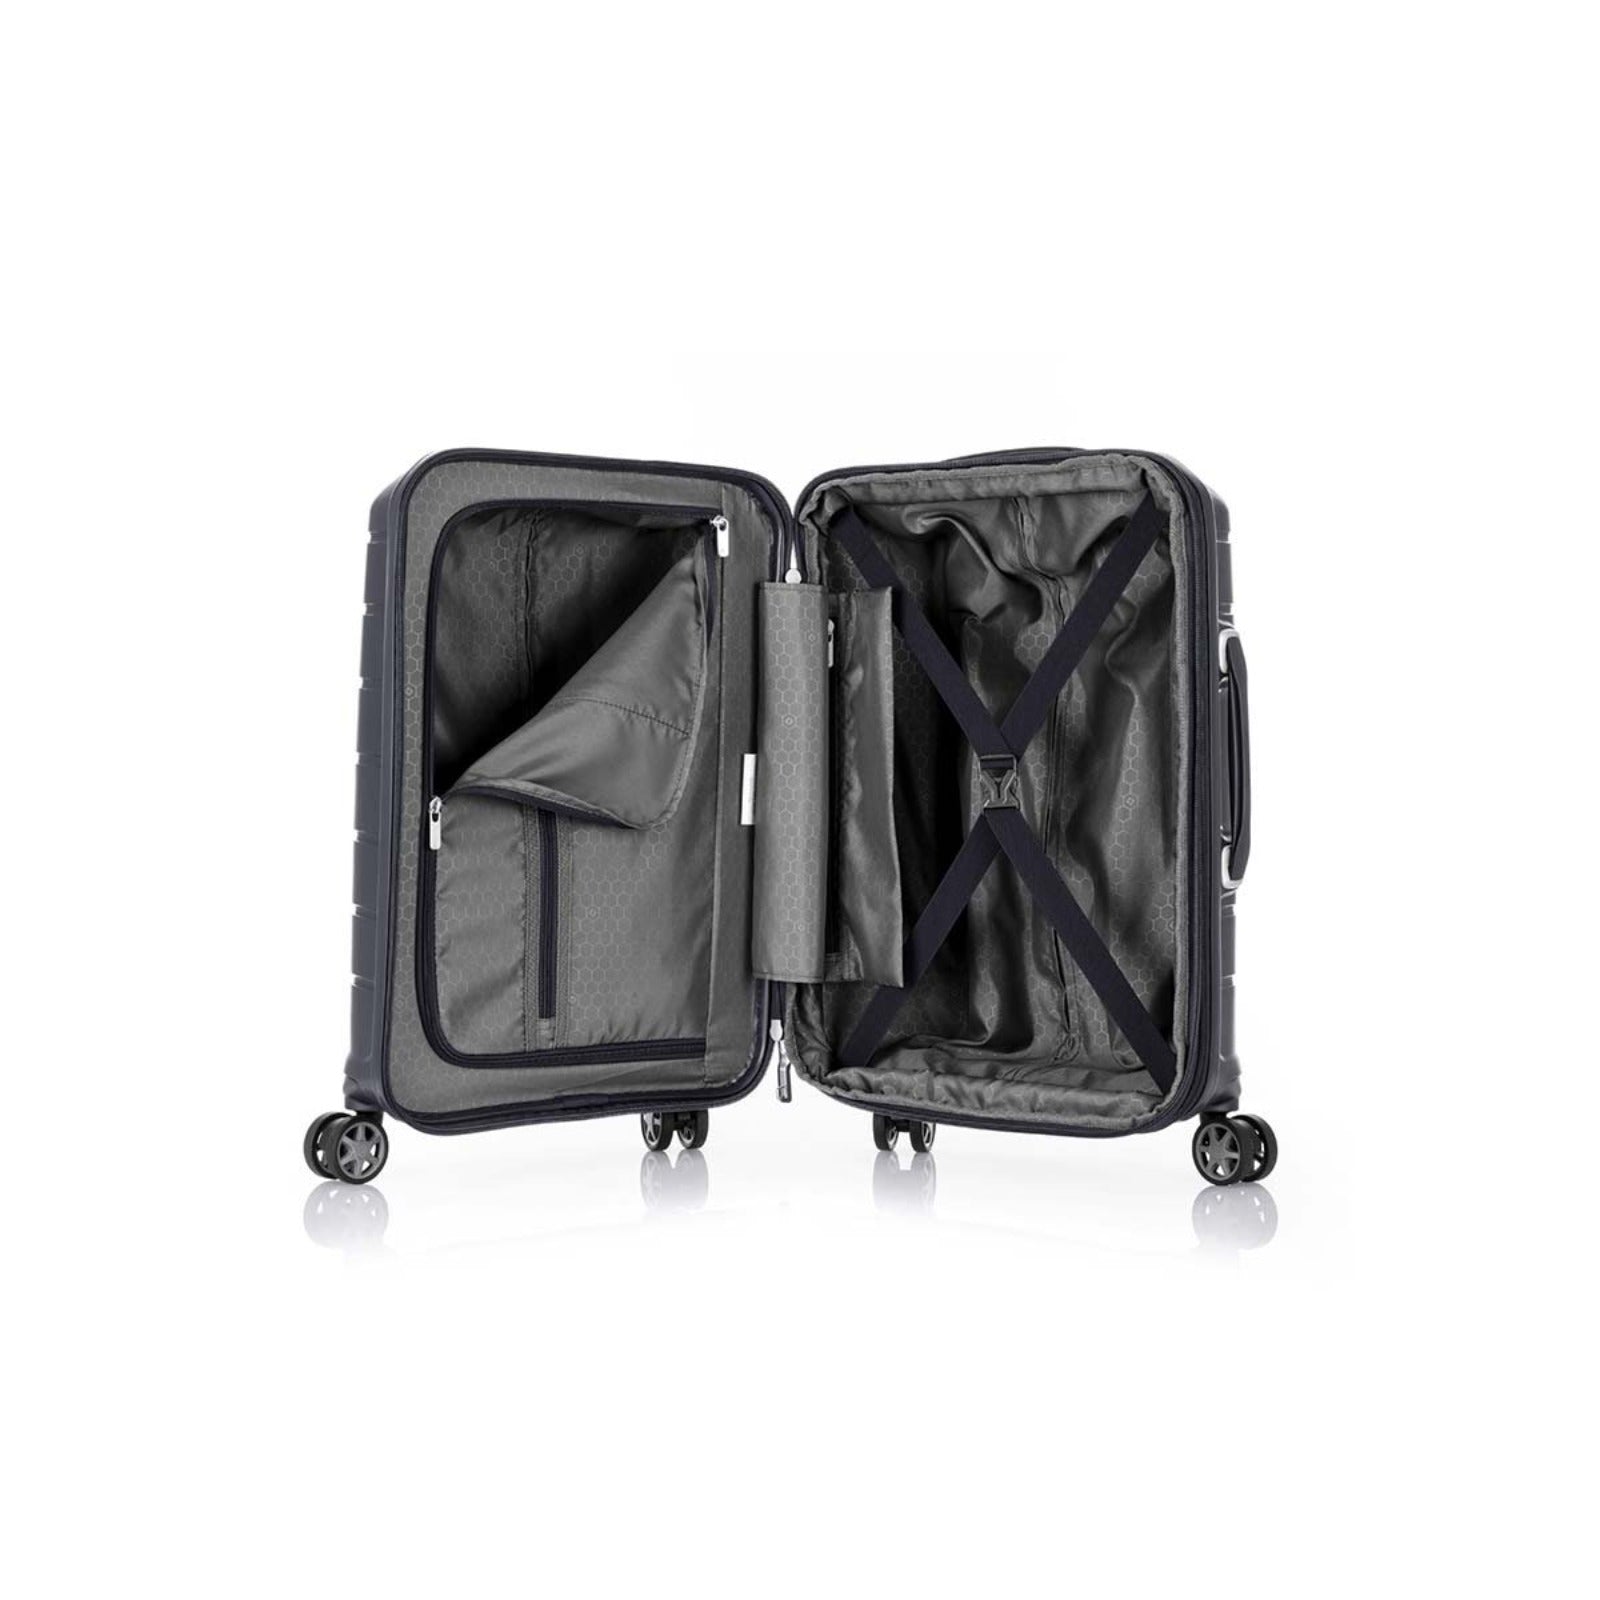 Samsonite_Oc2lite_55cm_Carry-On_Suitcase_Black_Open